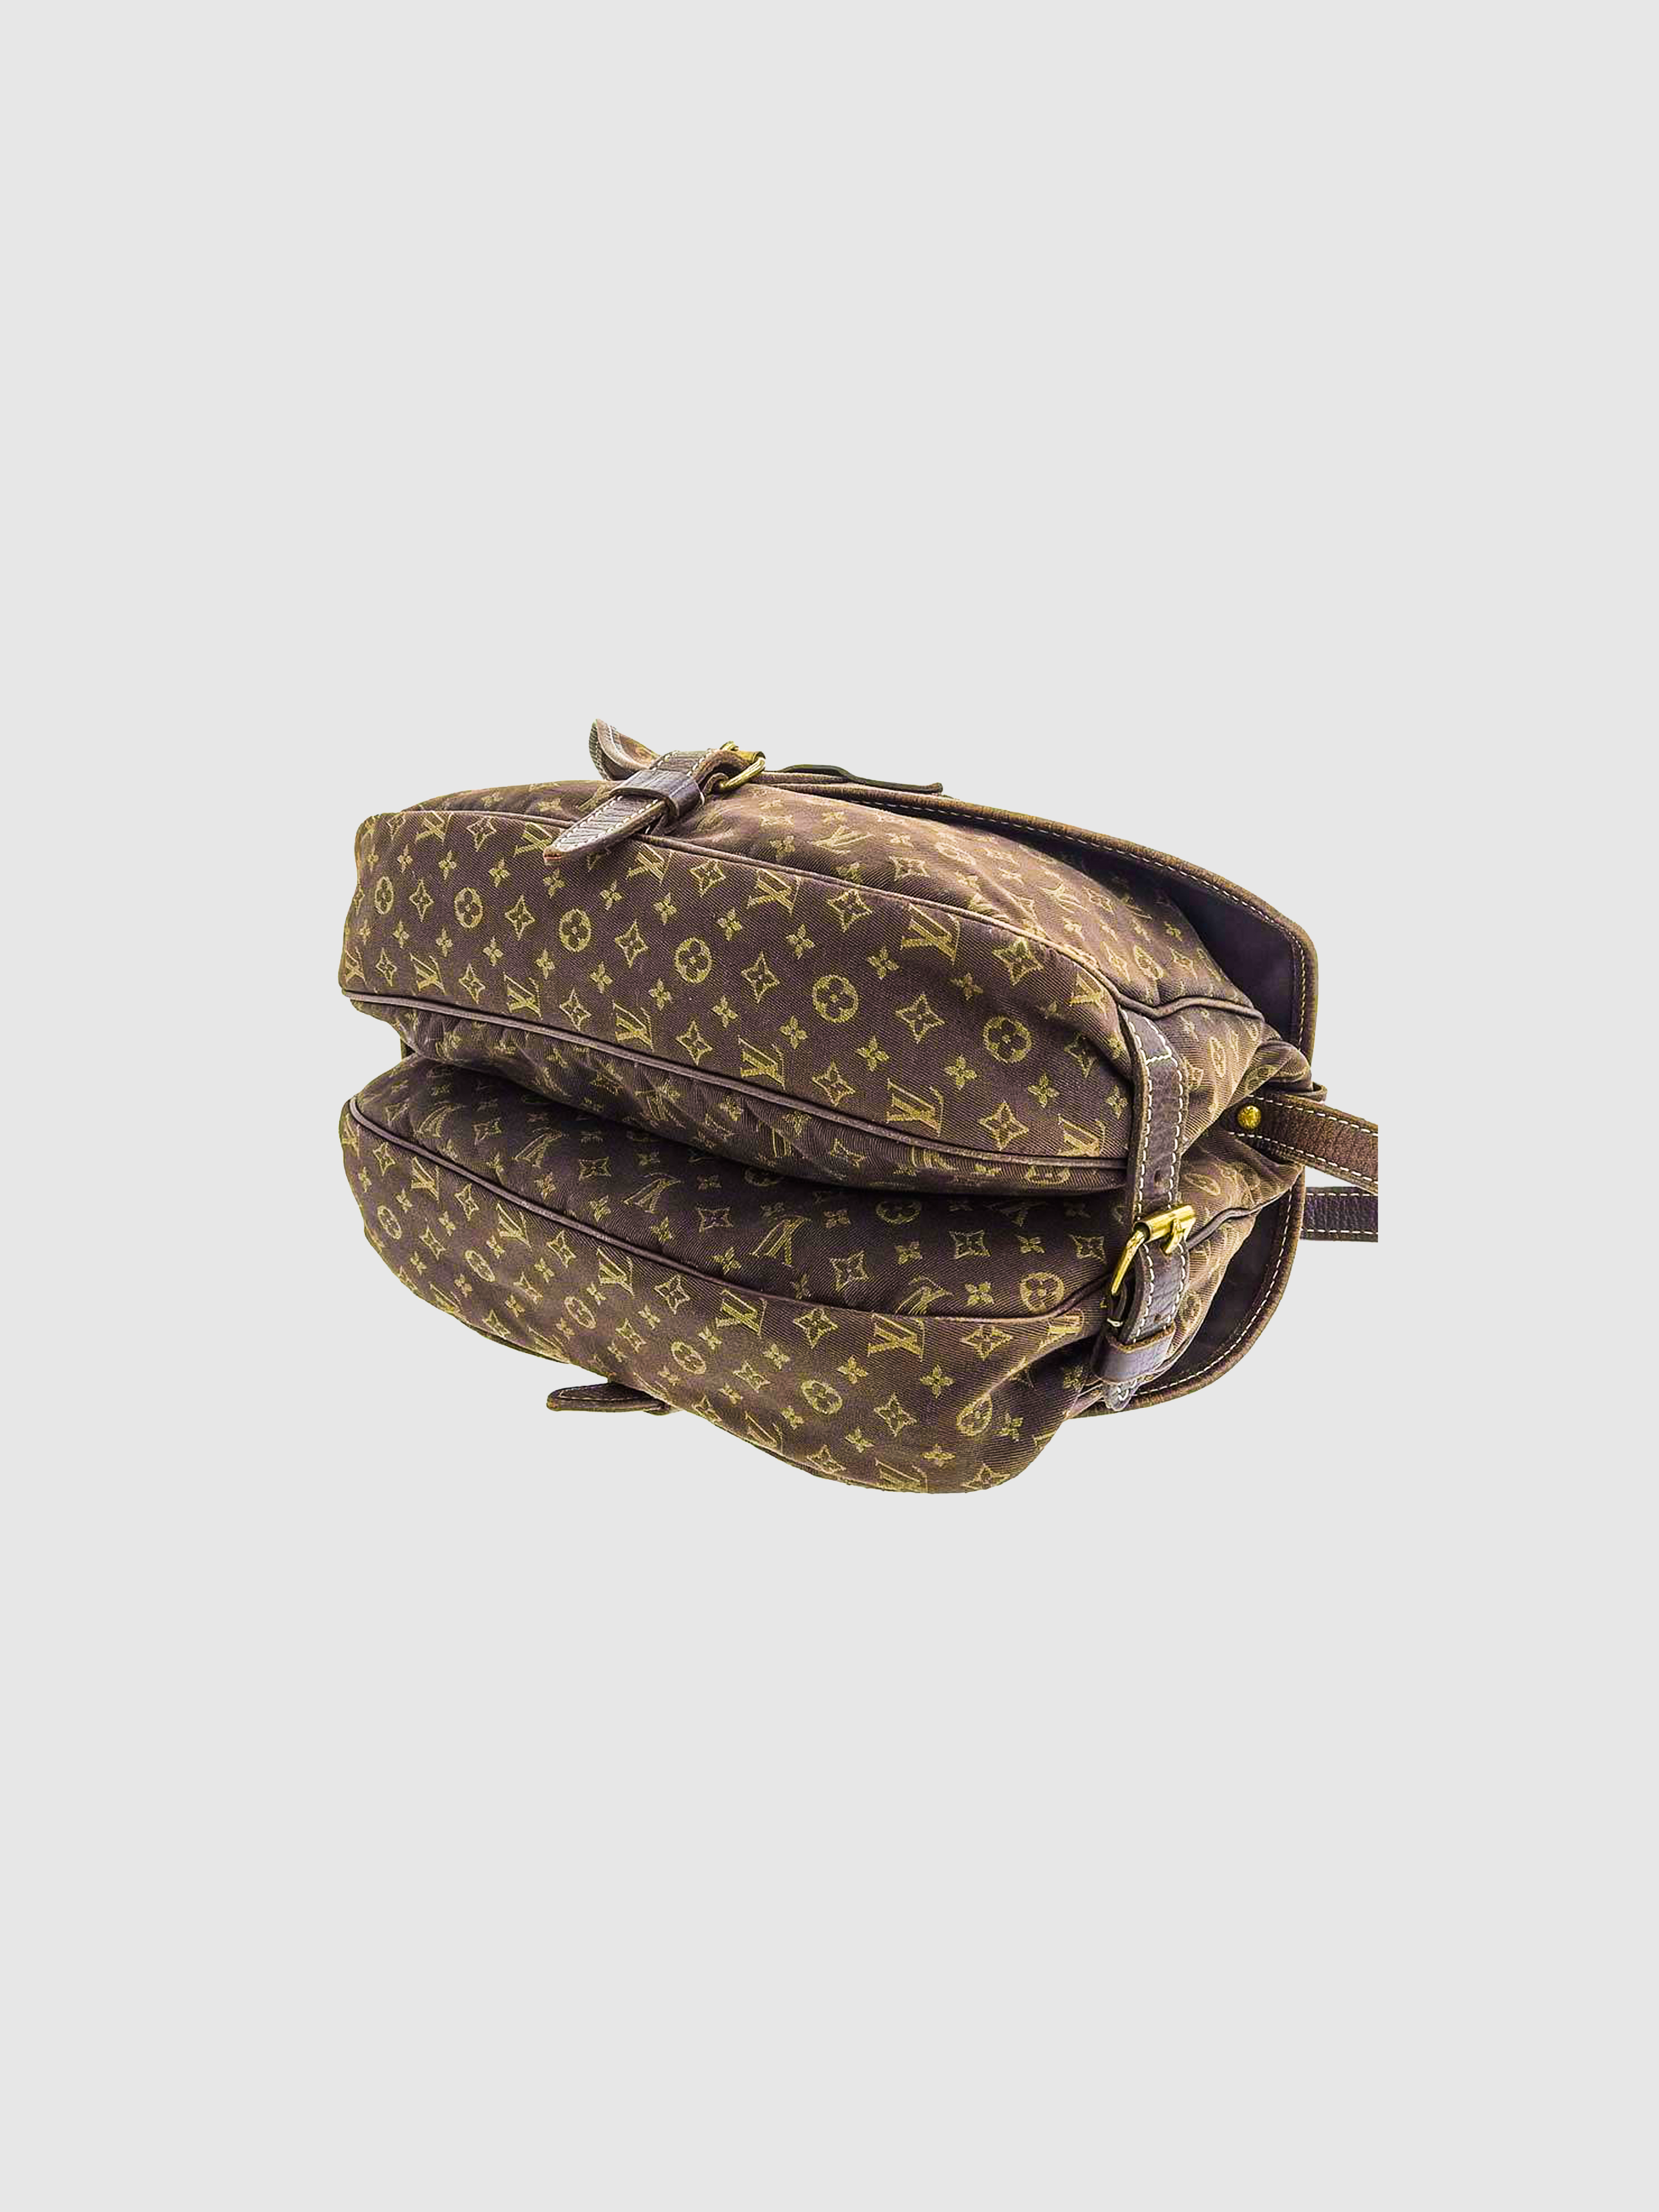 Louis Vuitton 2000s Monogram Vivasite Double Handbag · INTO